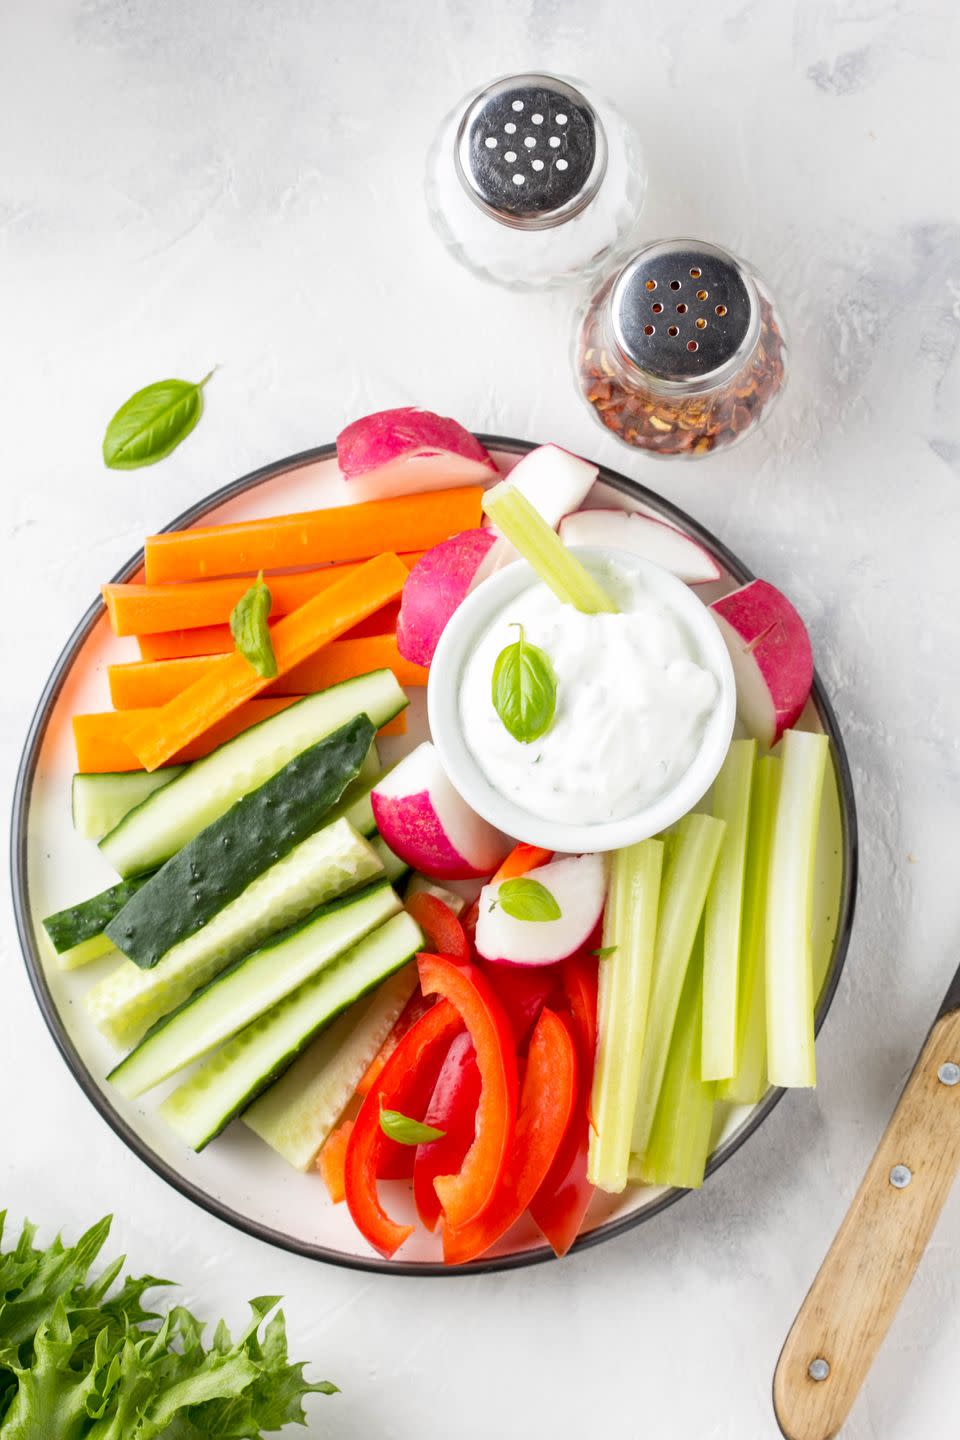 mediterranean diet vegetable sticks of cucumber pepper carrots celery and radishes with yogurt dip